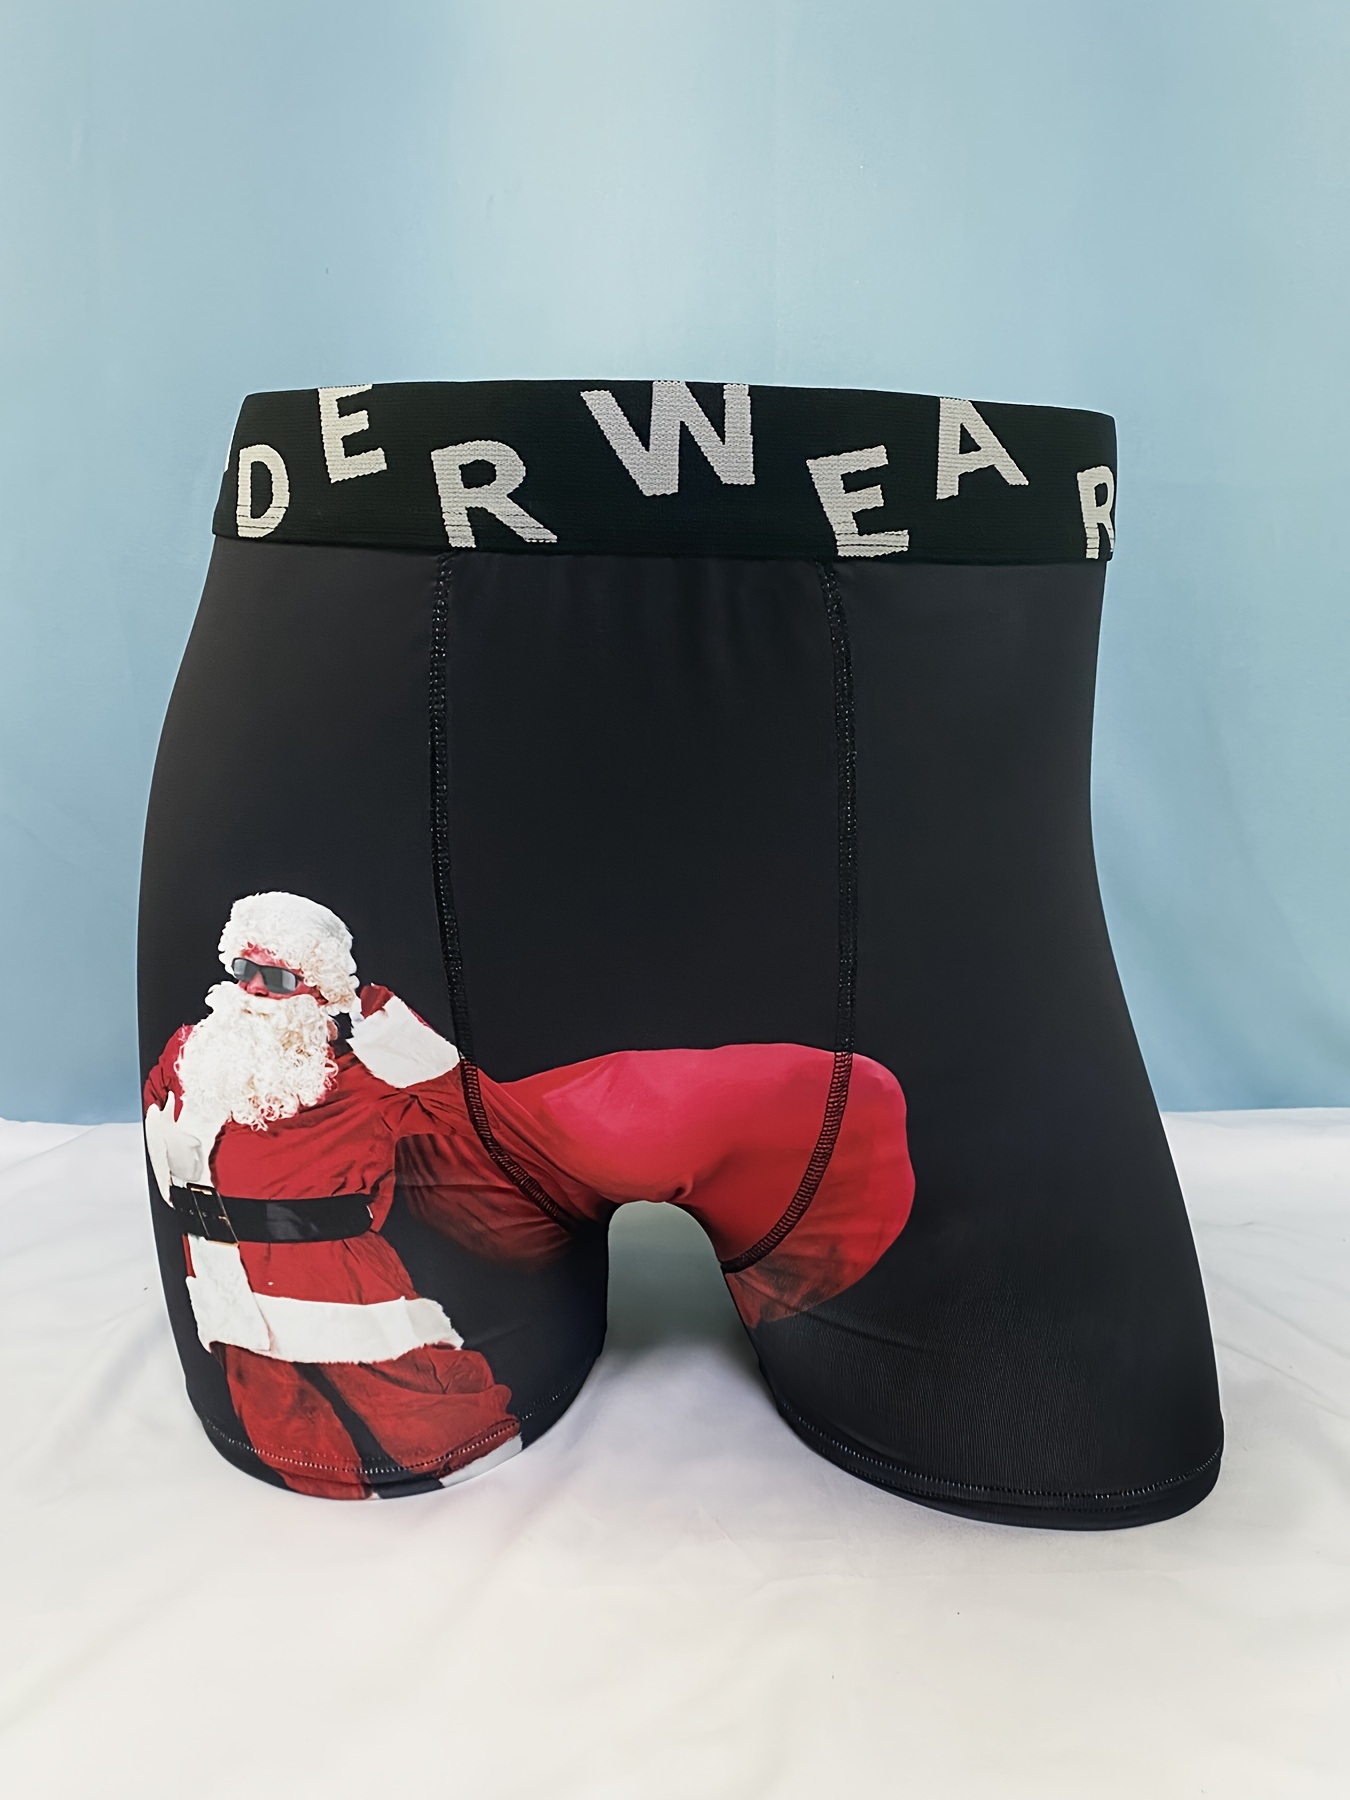 Men's Christmas Underwear, Boxers & Boxer Briefs